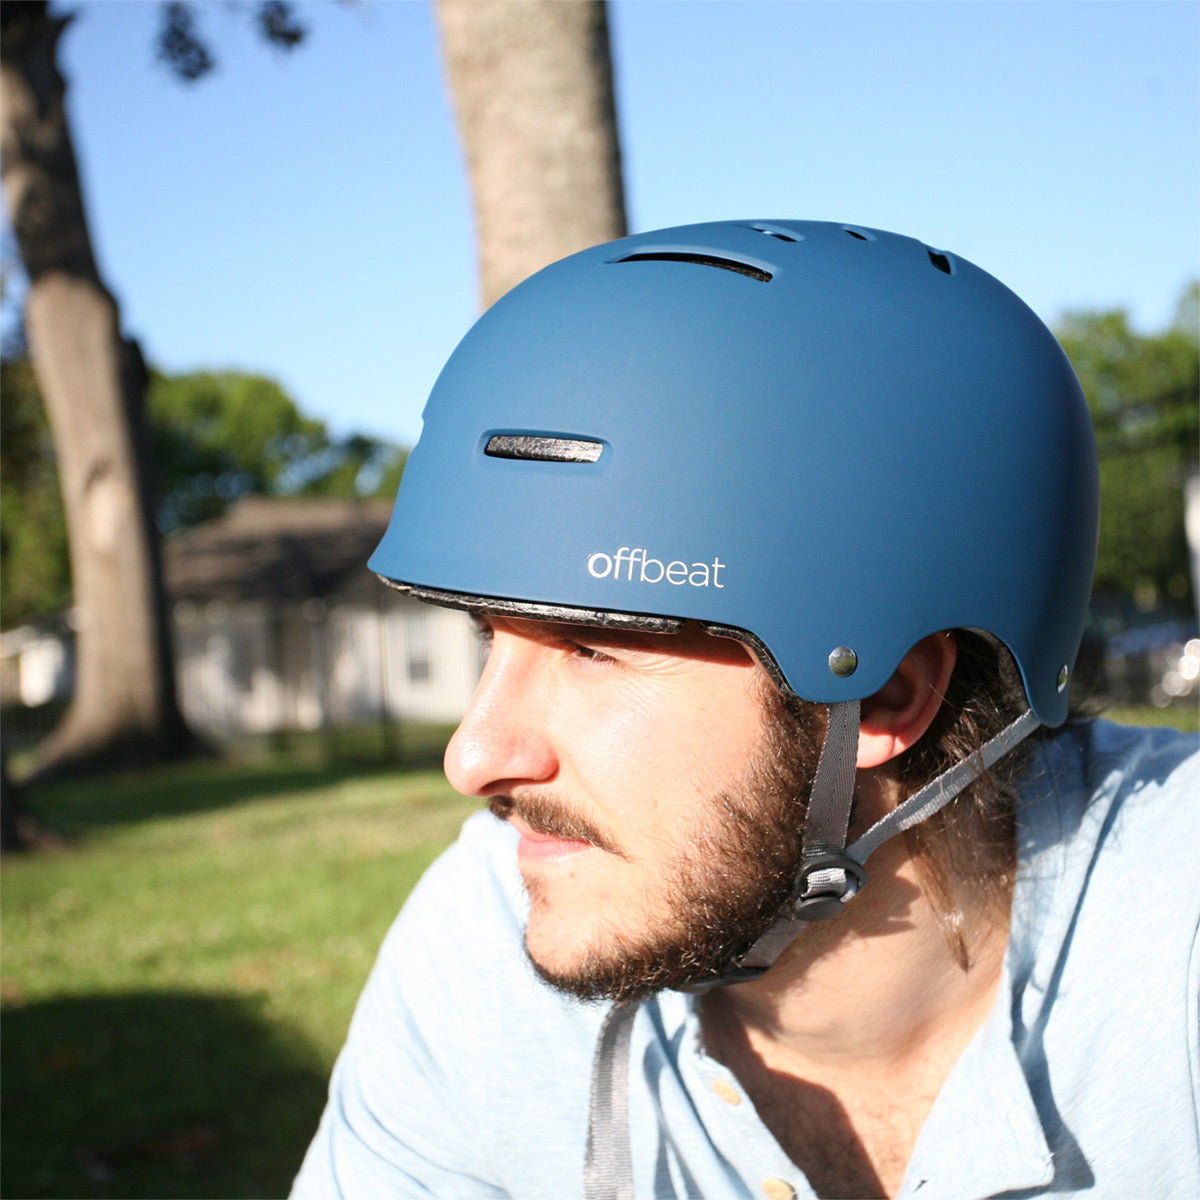 FREETOWN - OFFBEAT - Multi Sport Helmet - ZEITBIKE